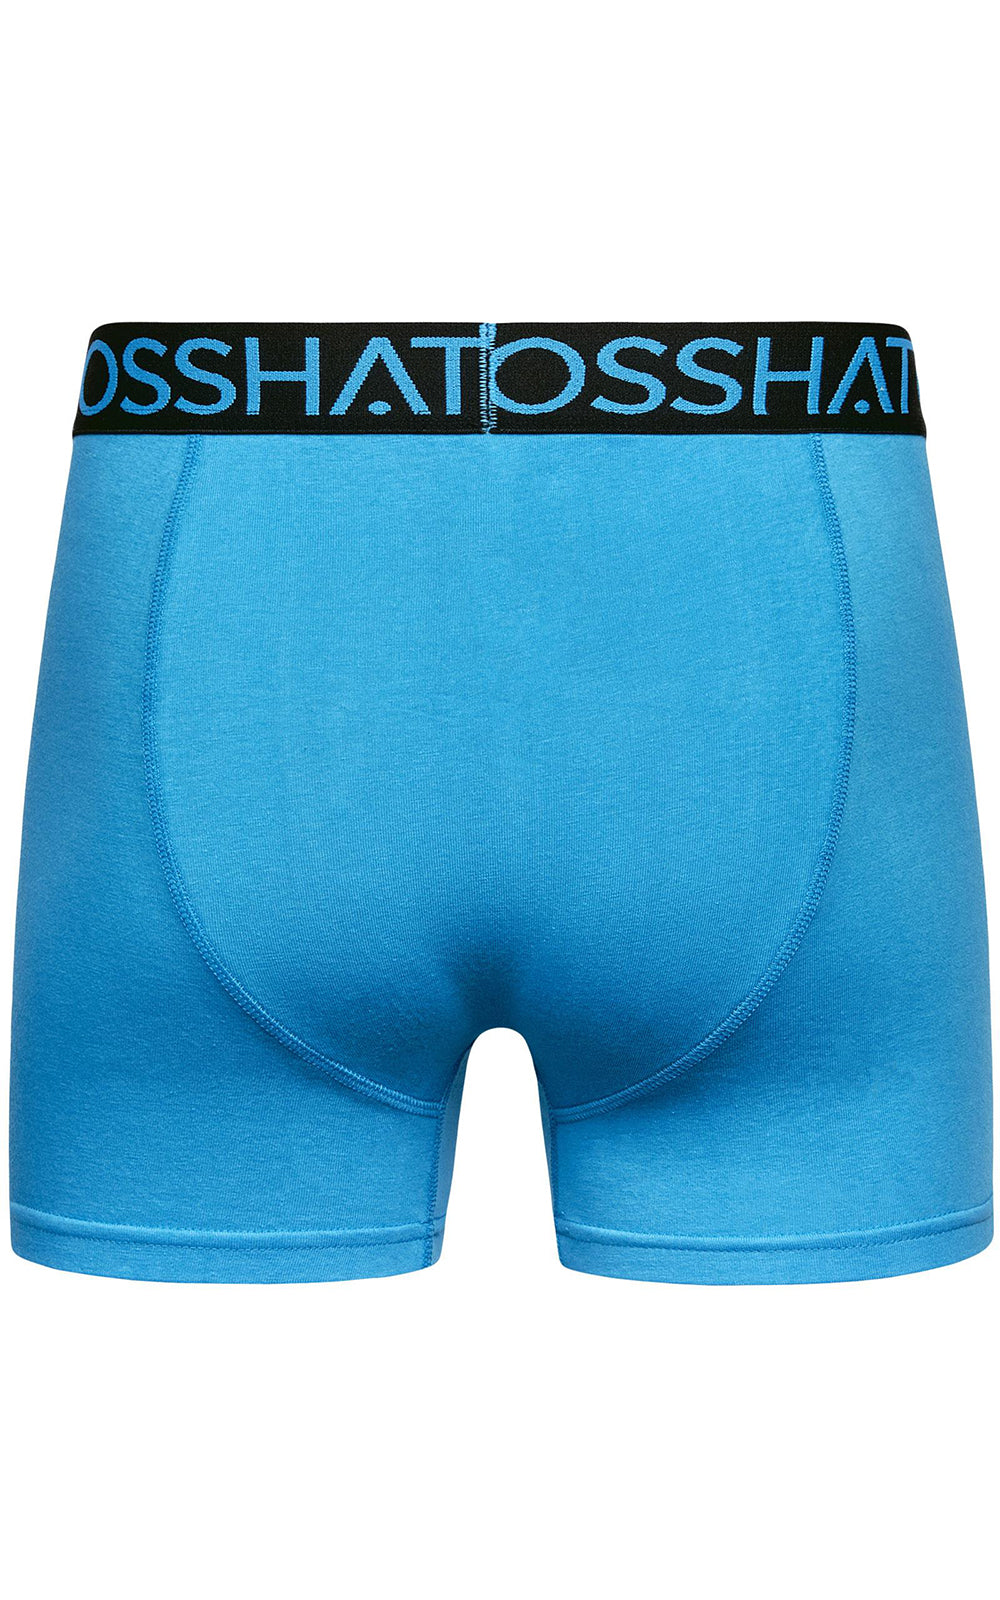 3 Pairs of Multicolour Crosshatch Men's Shorts